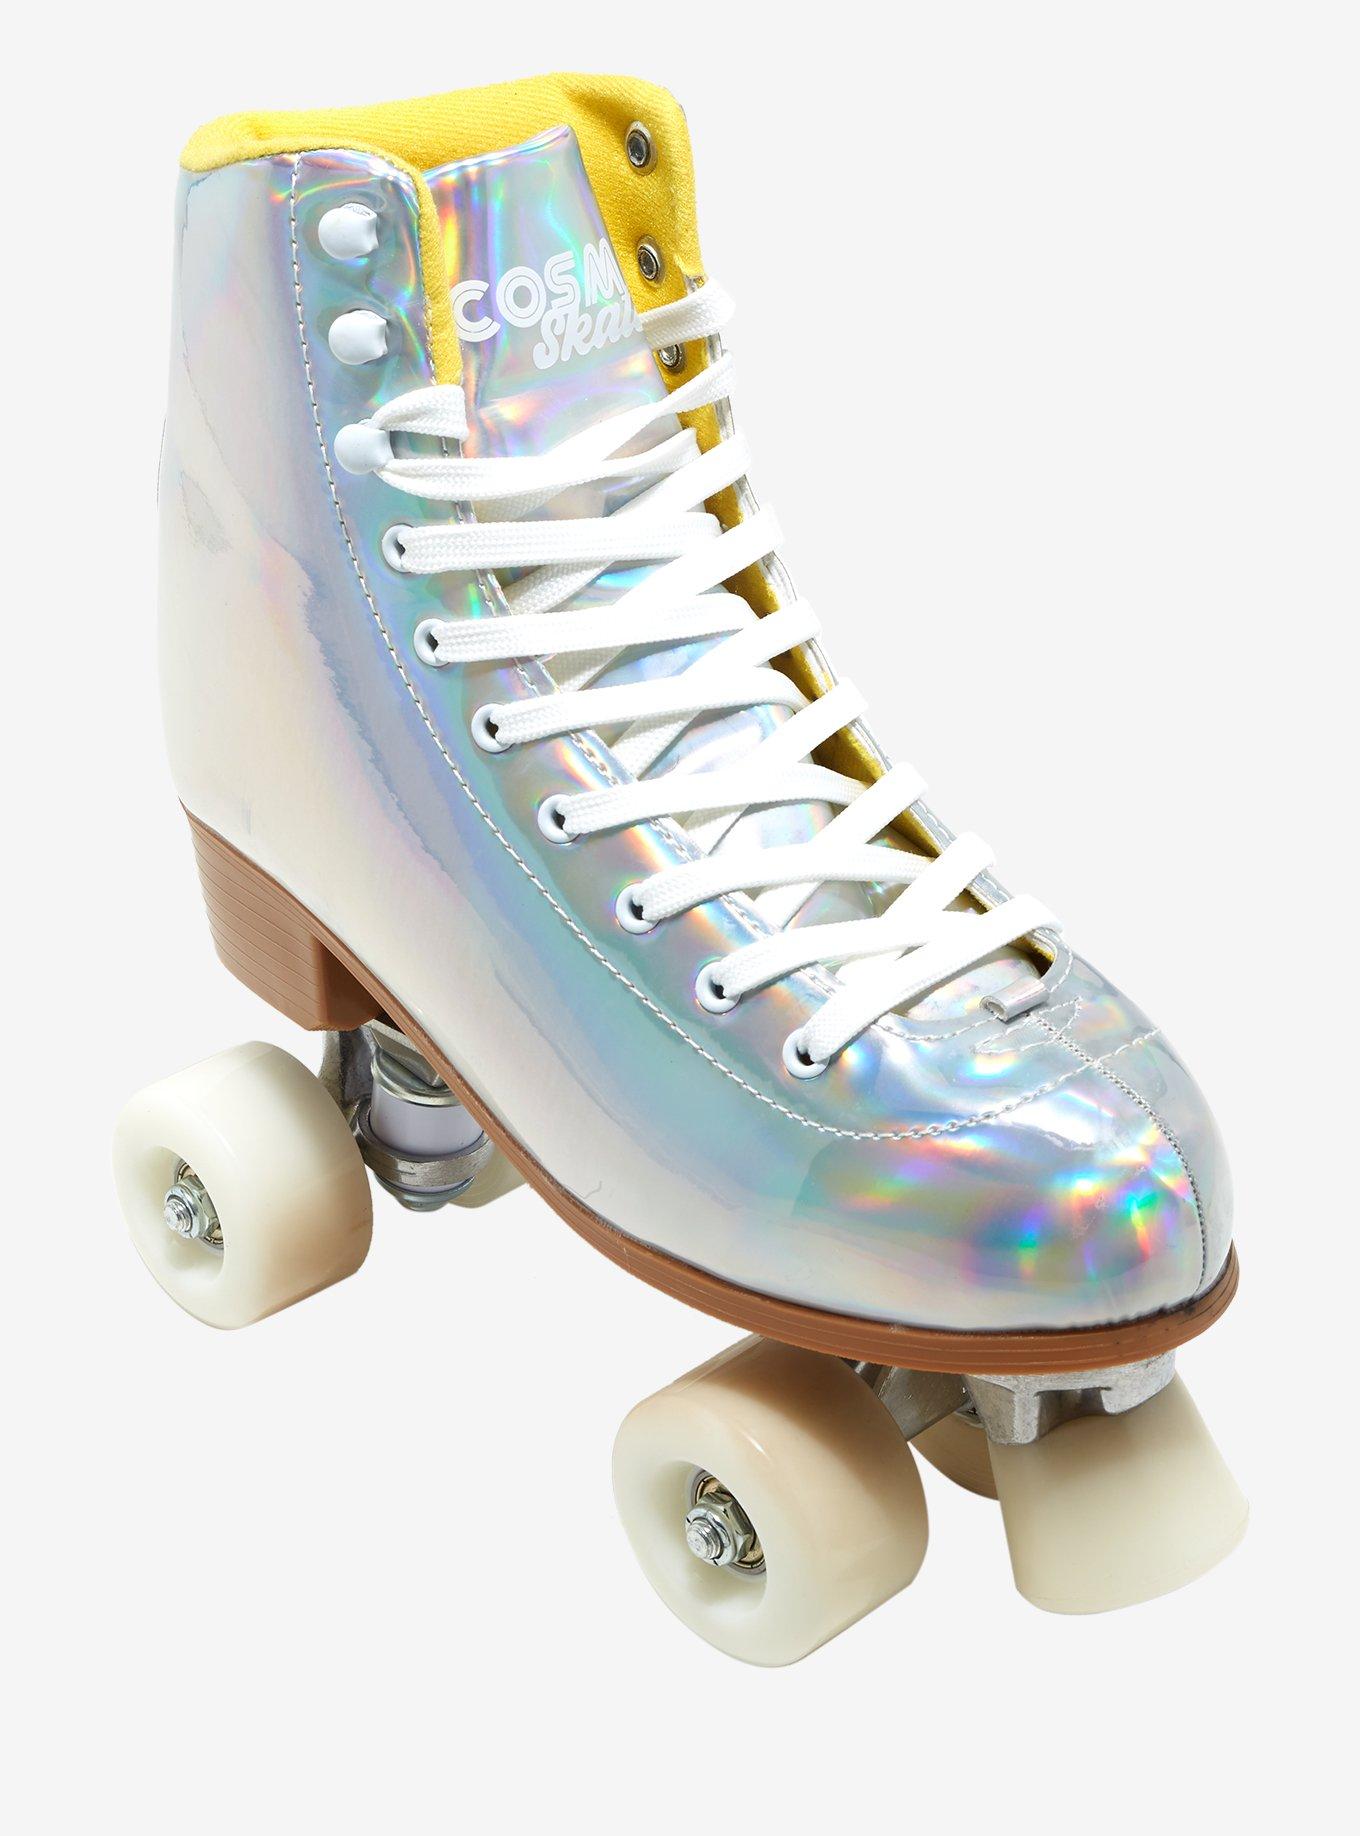 Anime Roller Skate Patch/roller Skate Accessories/roller Skate 